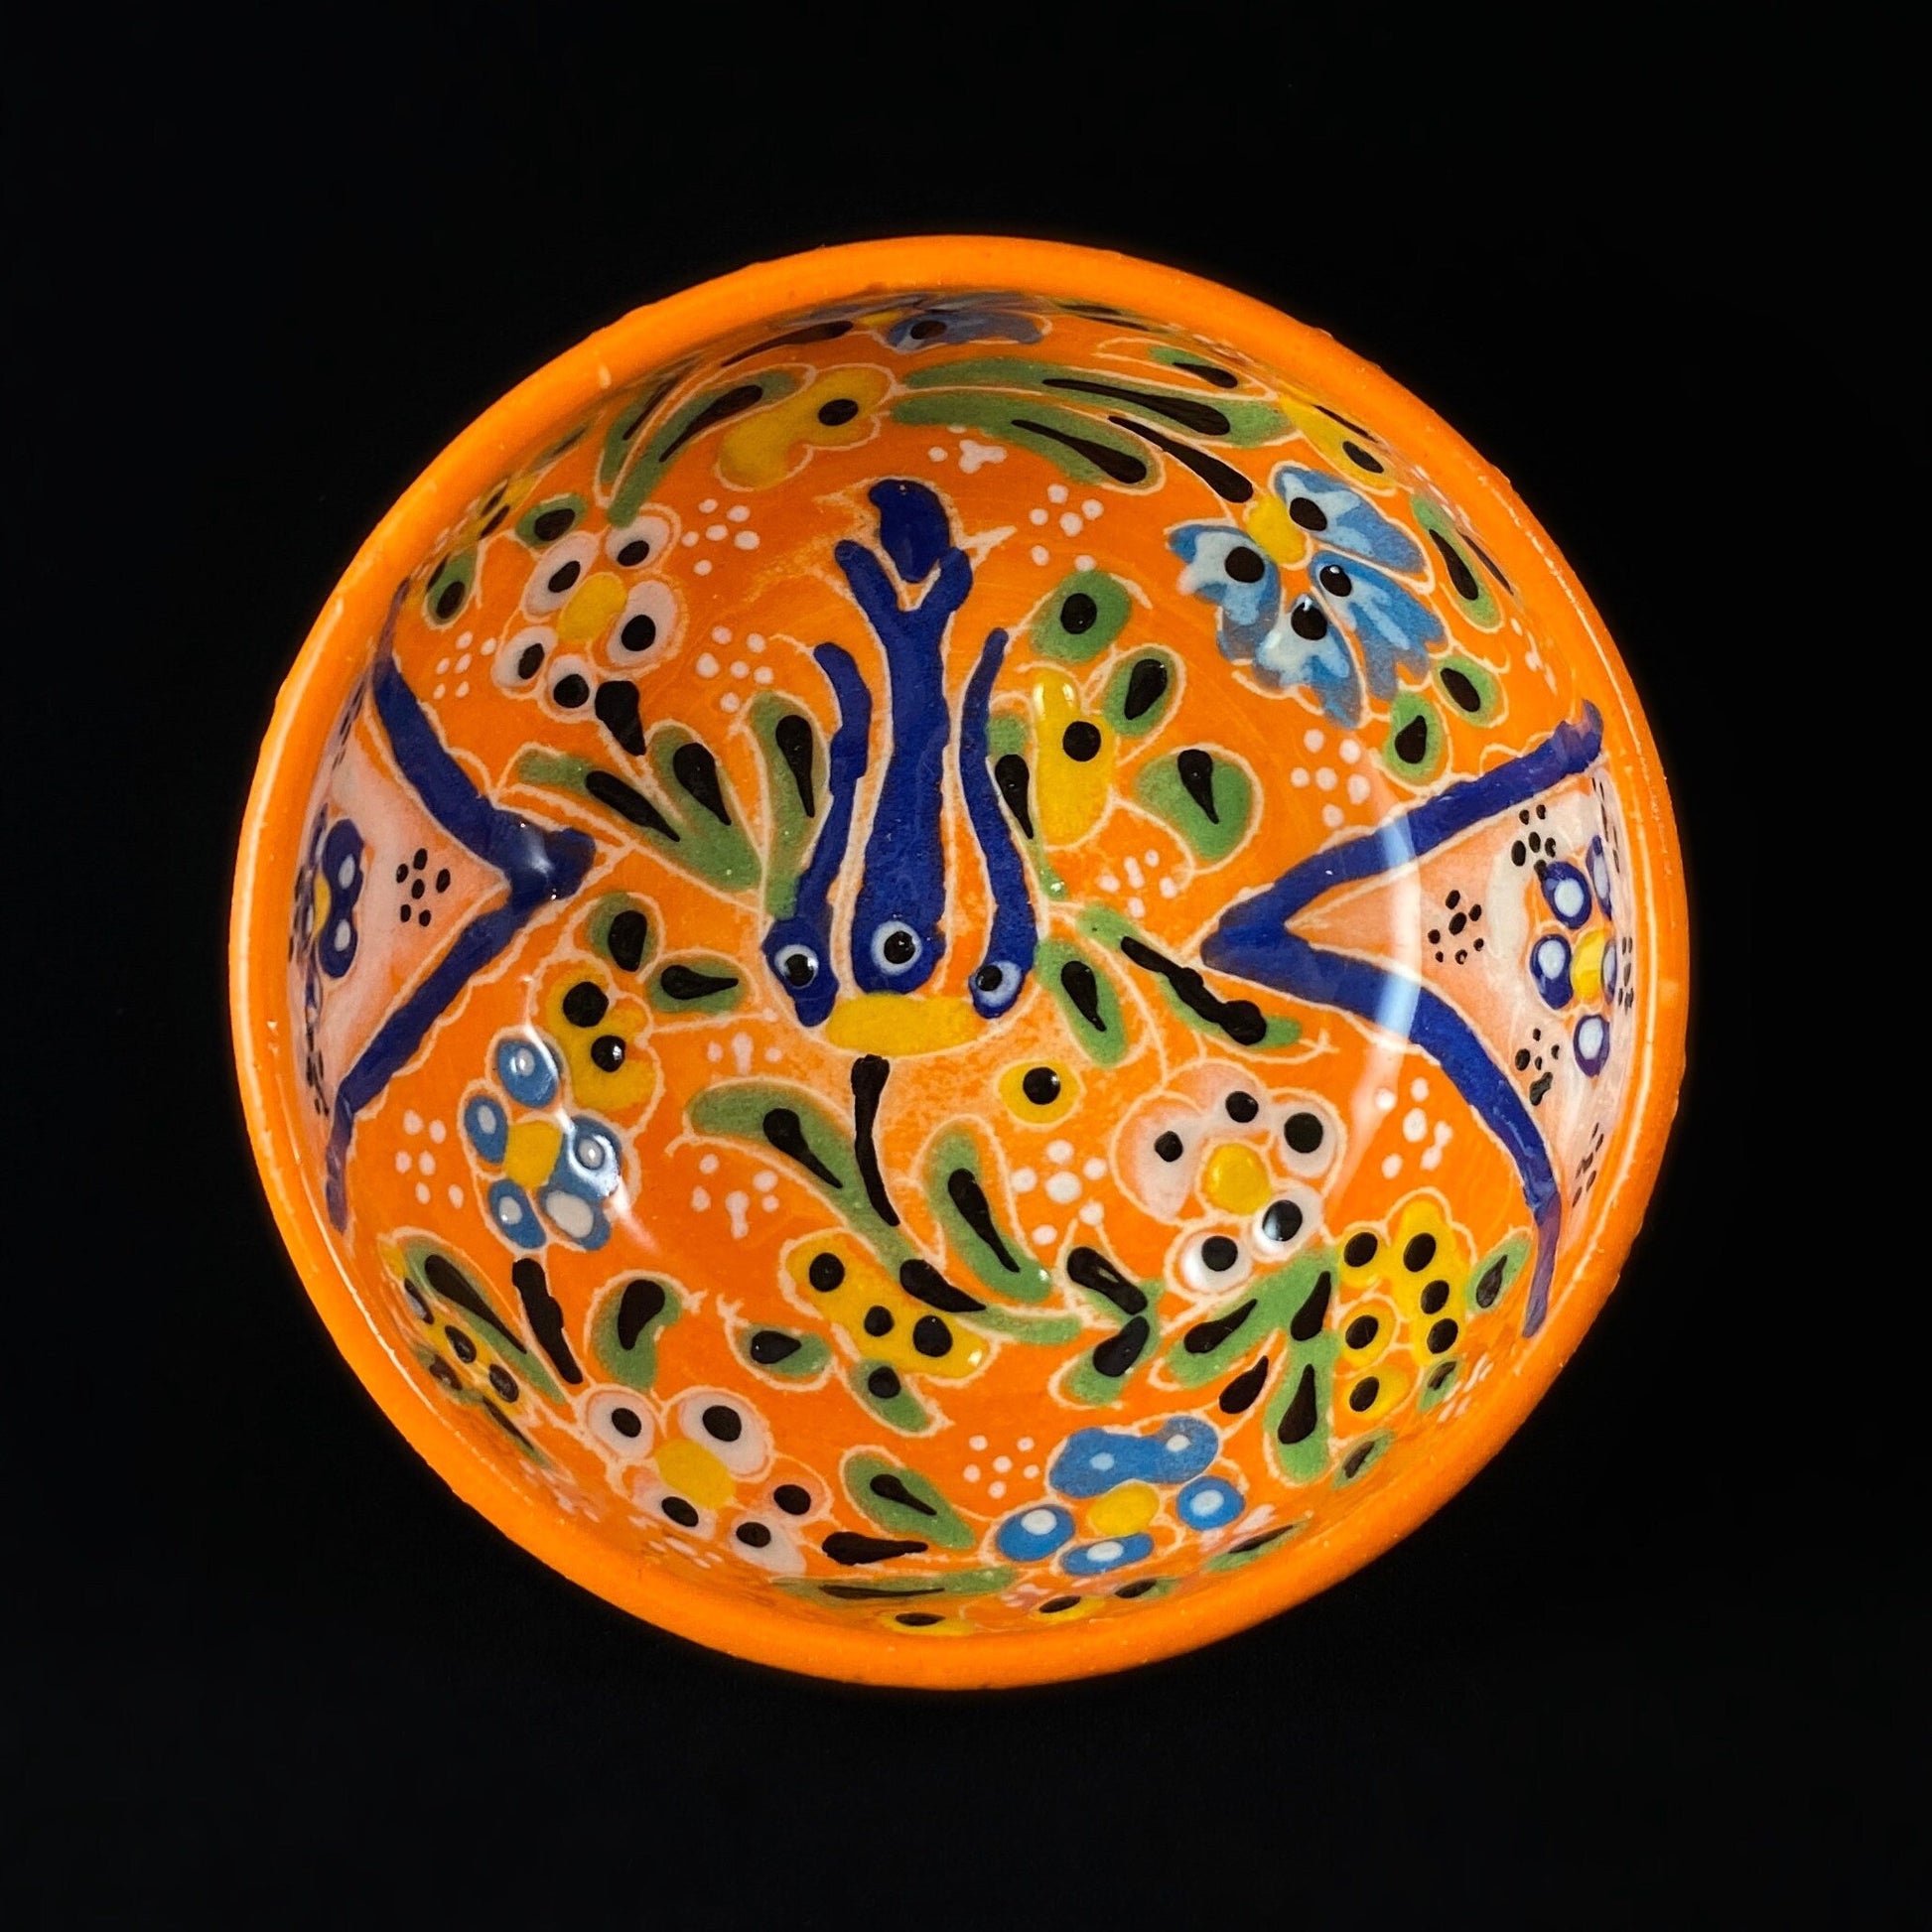 Handmade Small Bowl, Functional and Decorative Turkish Pottery, Cottagecore Style, Orange